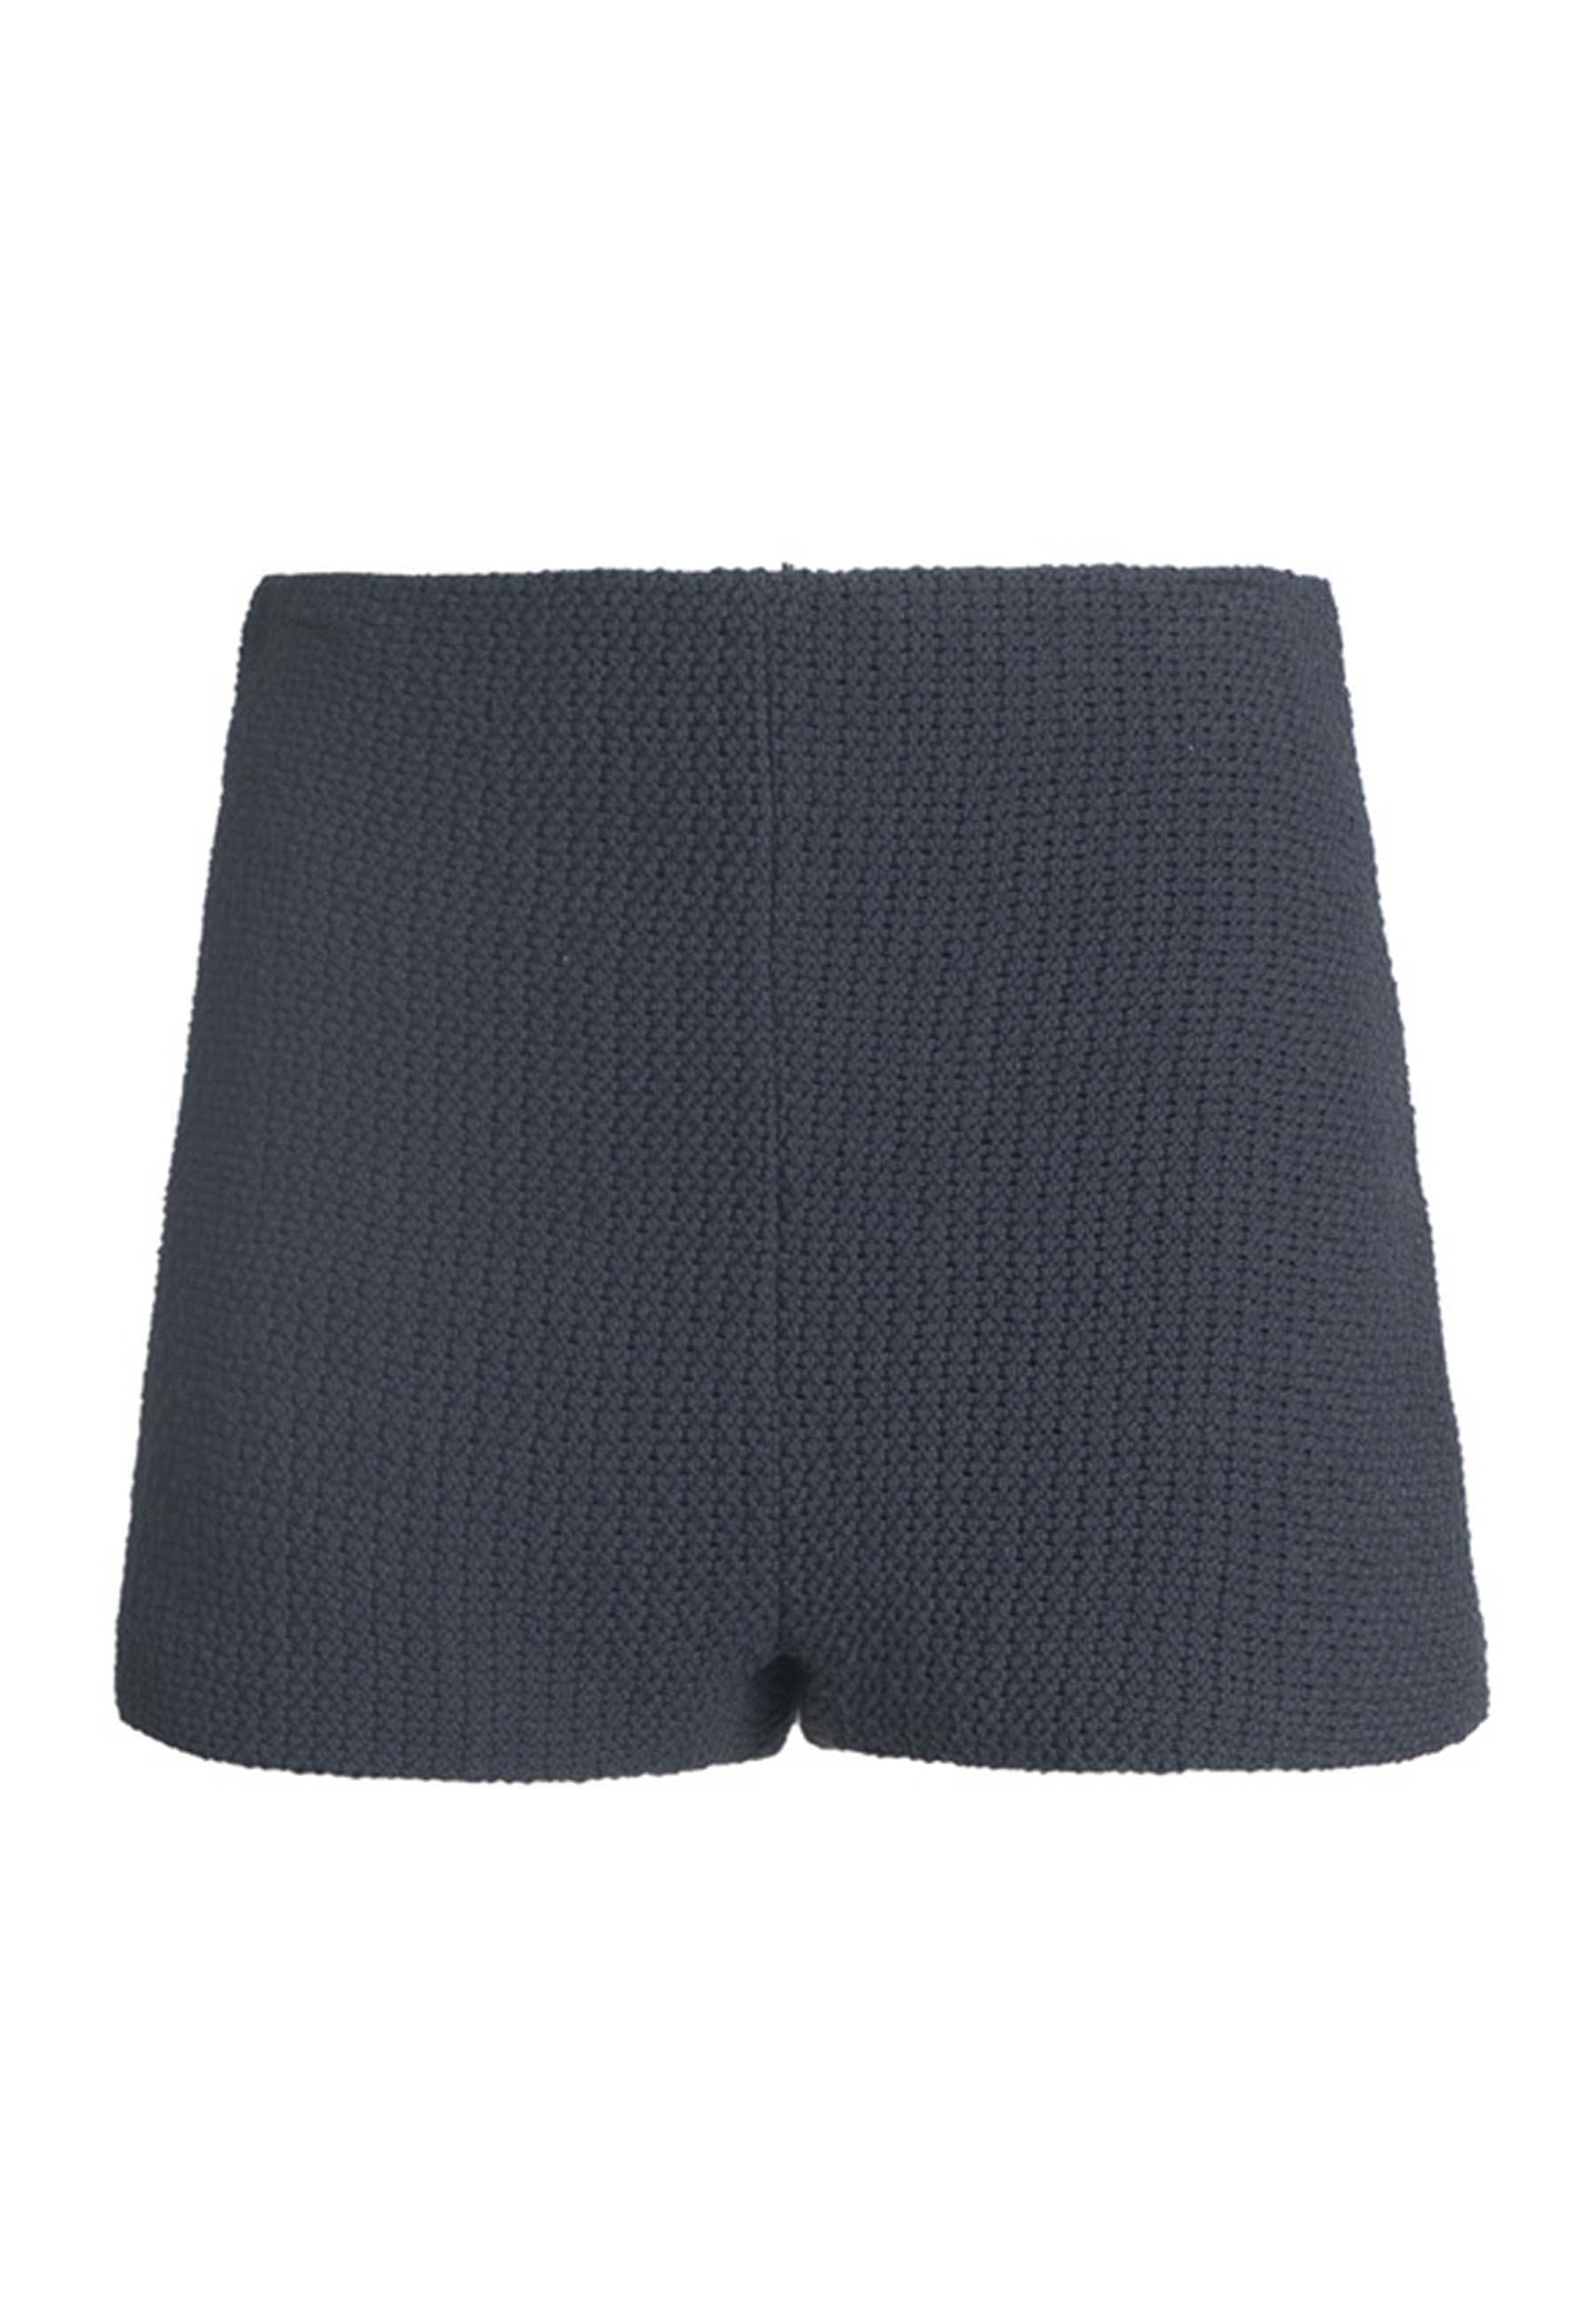 Women's culotte shorts in gray stretch fabric